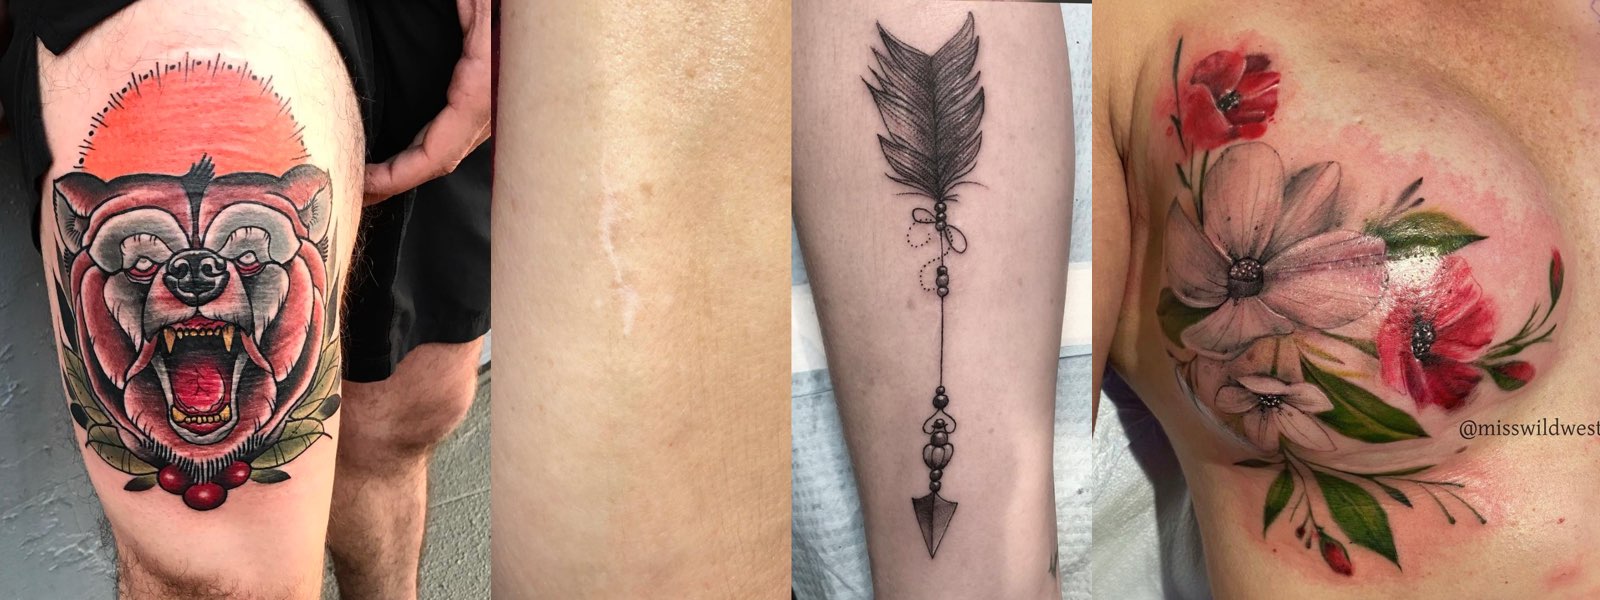 Tattooing Over Scars  NAOHOA